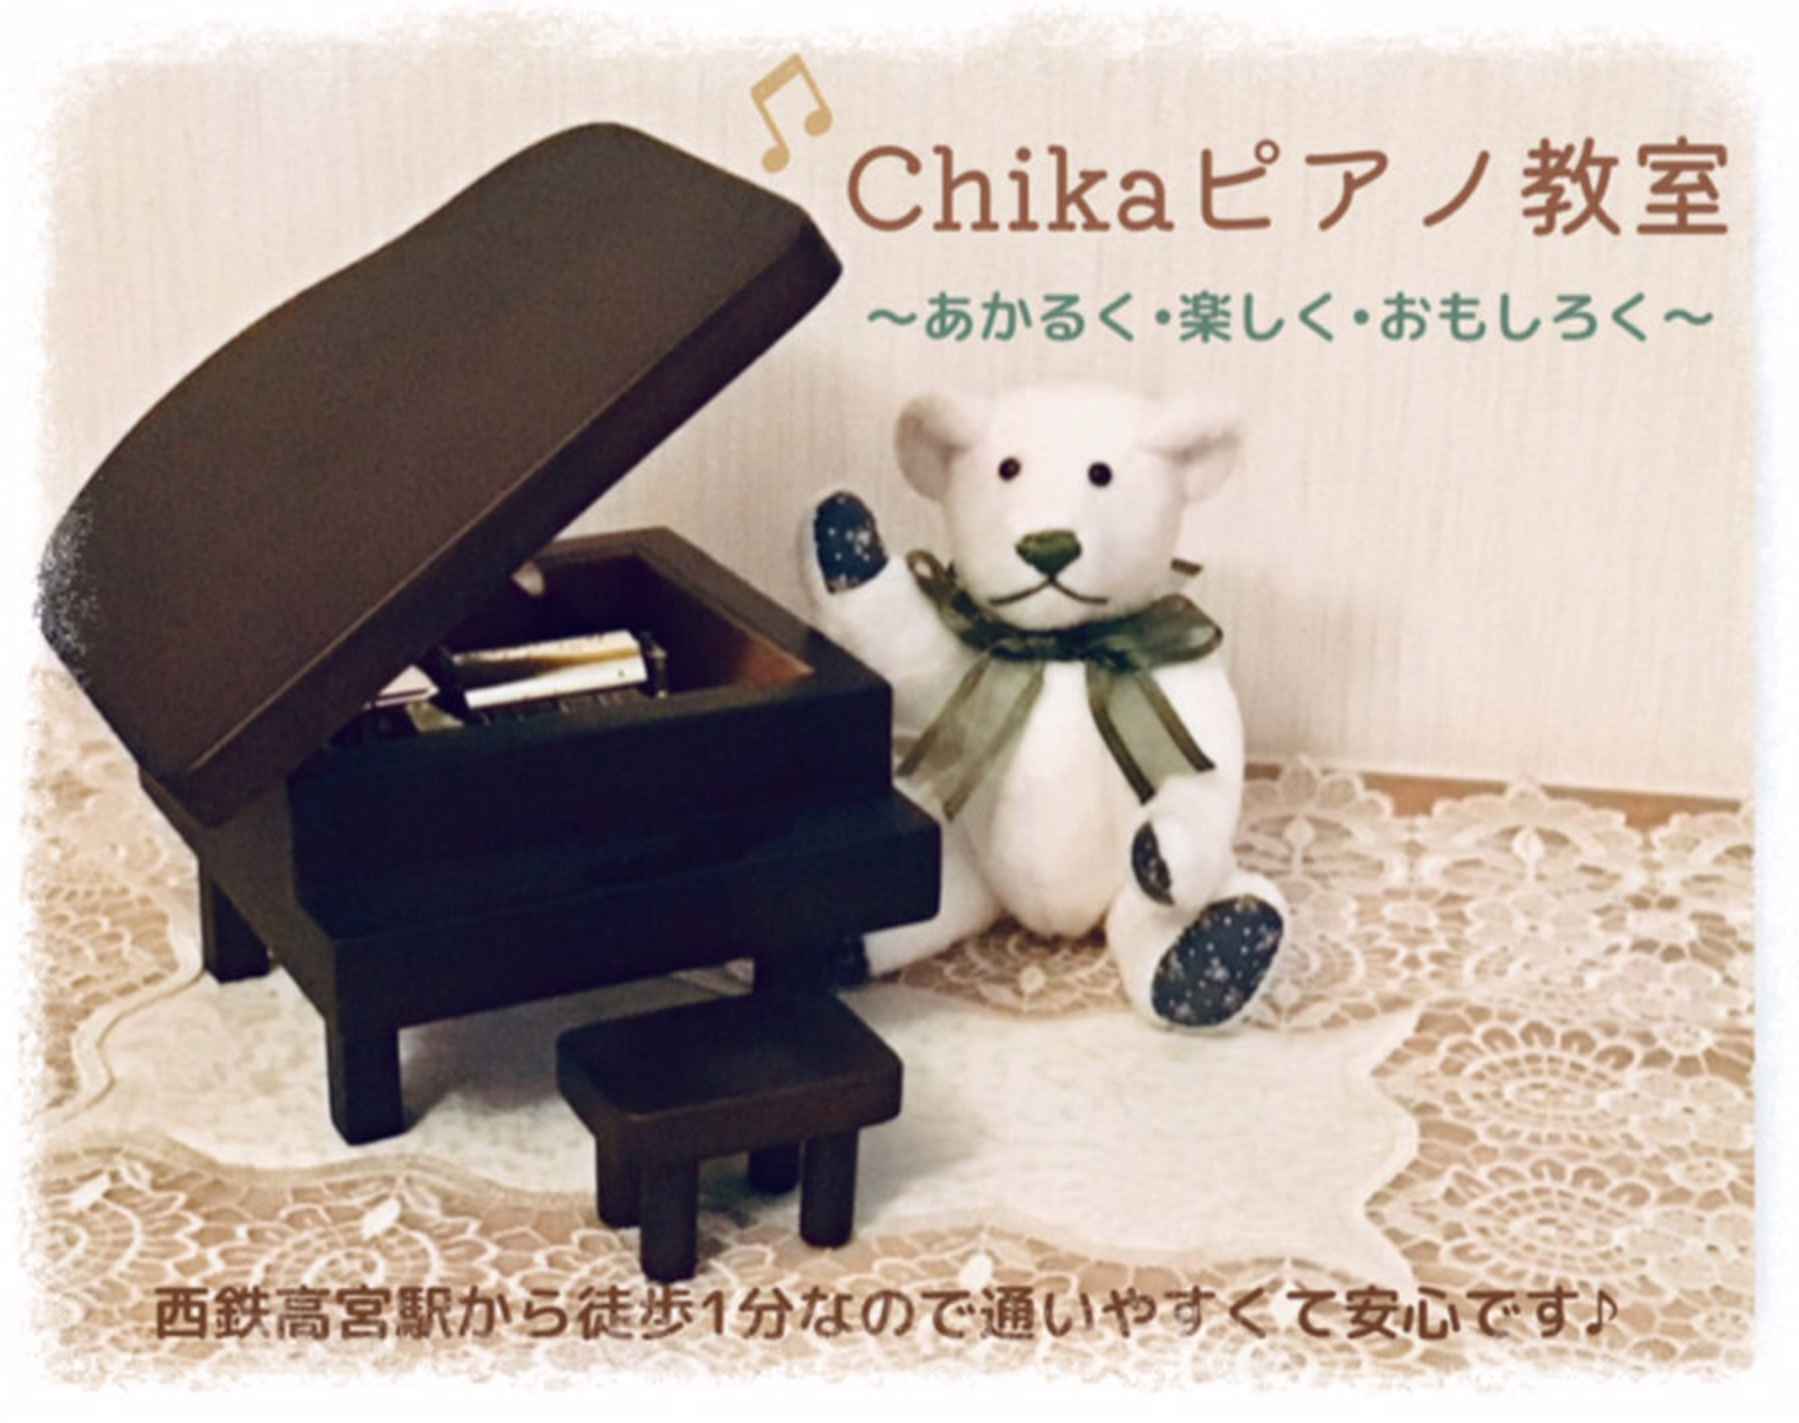 Chikaピアノ教室の雰囲気がわかる写真